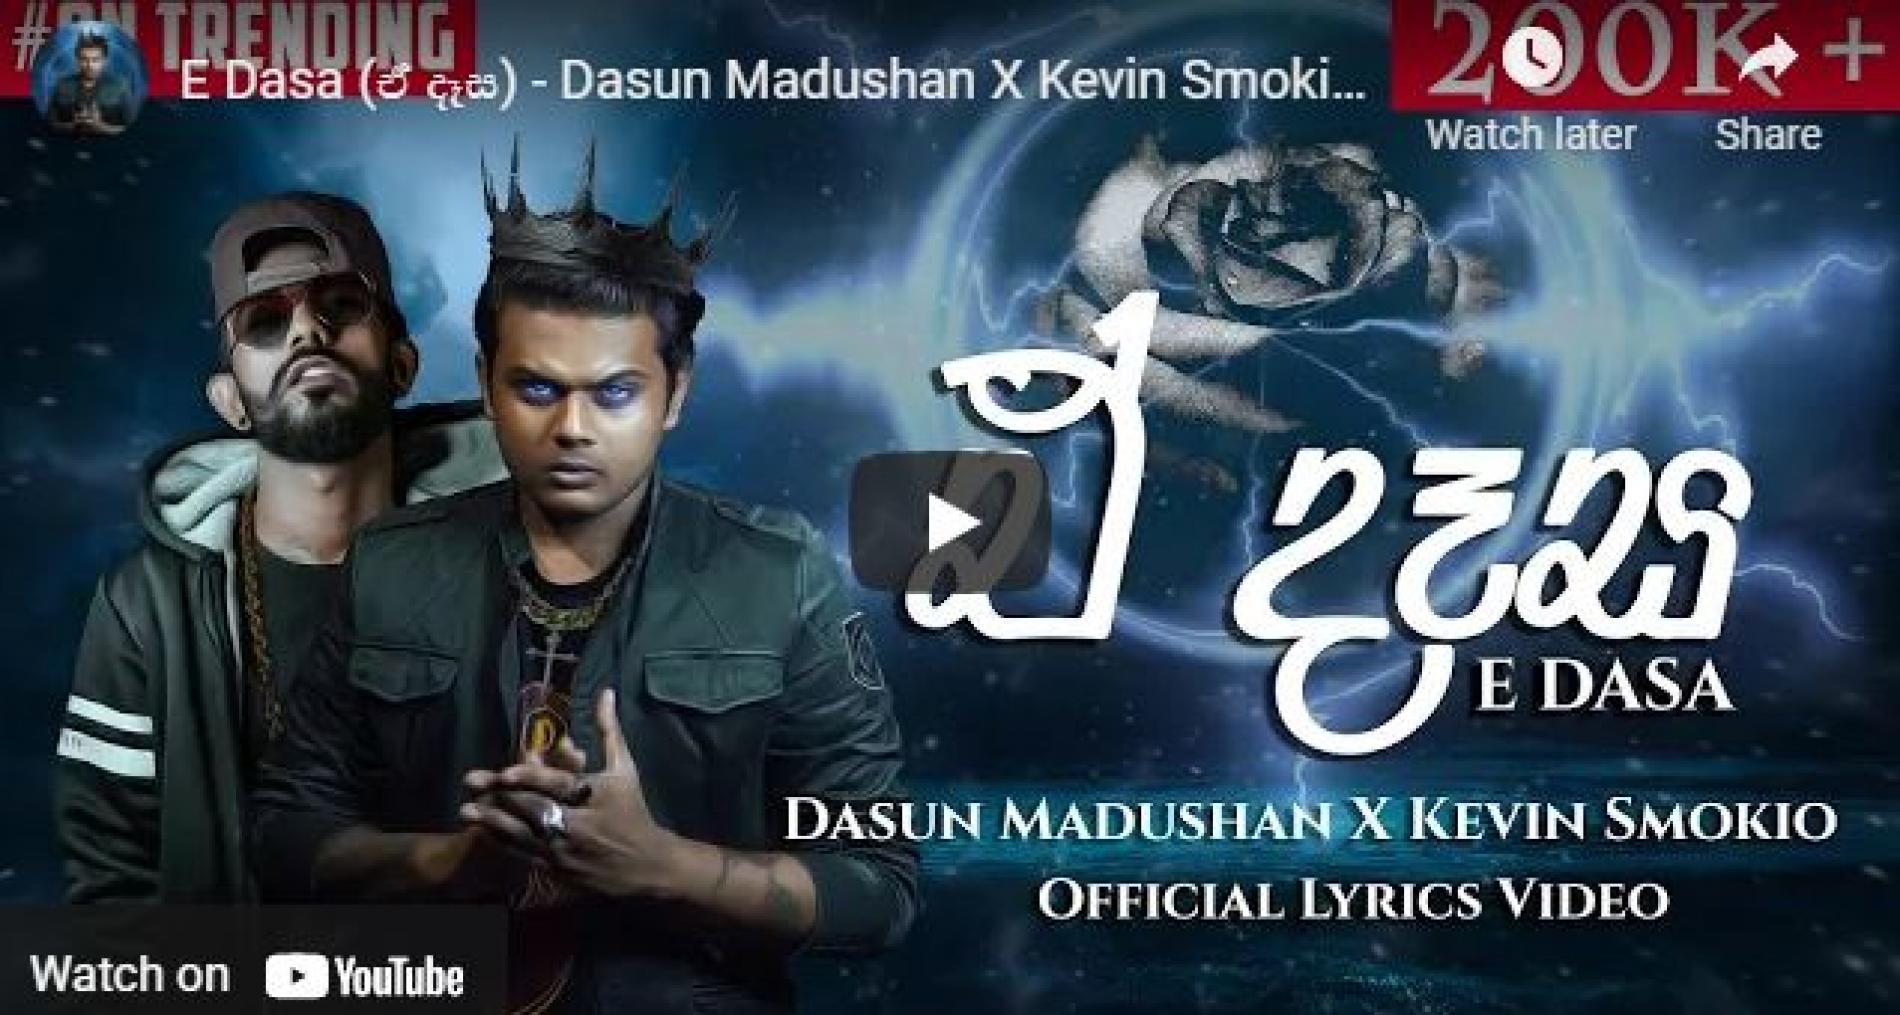 New Music : E Dasa (ඒ දෑස) – Dasun Madushan X Kevin Smokio (Official Lyrics Video)